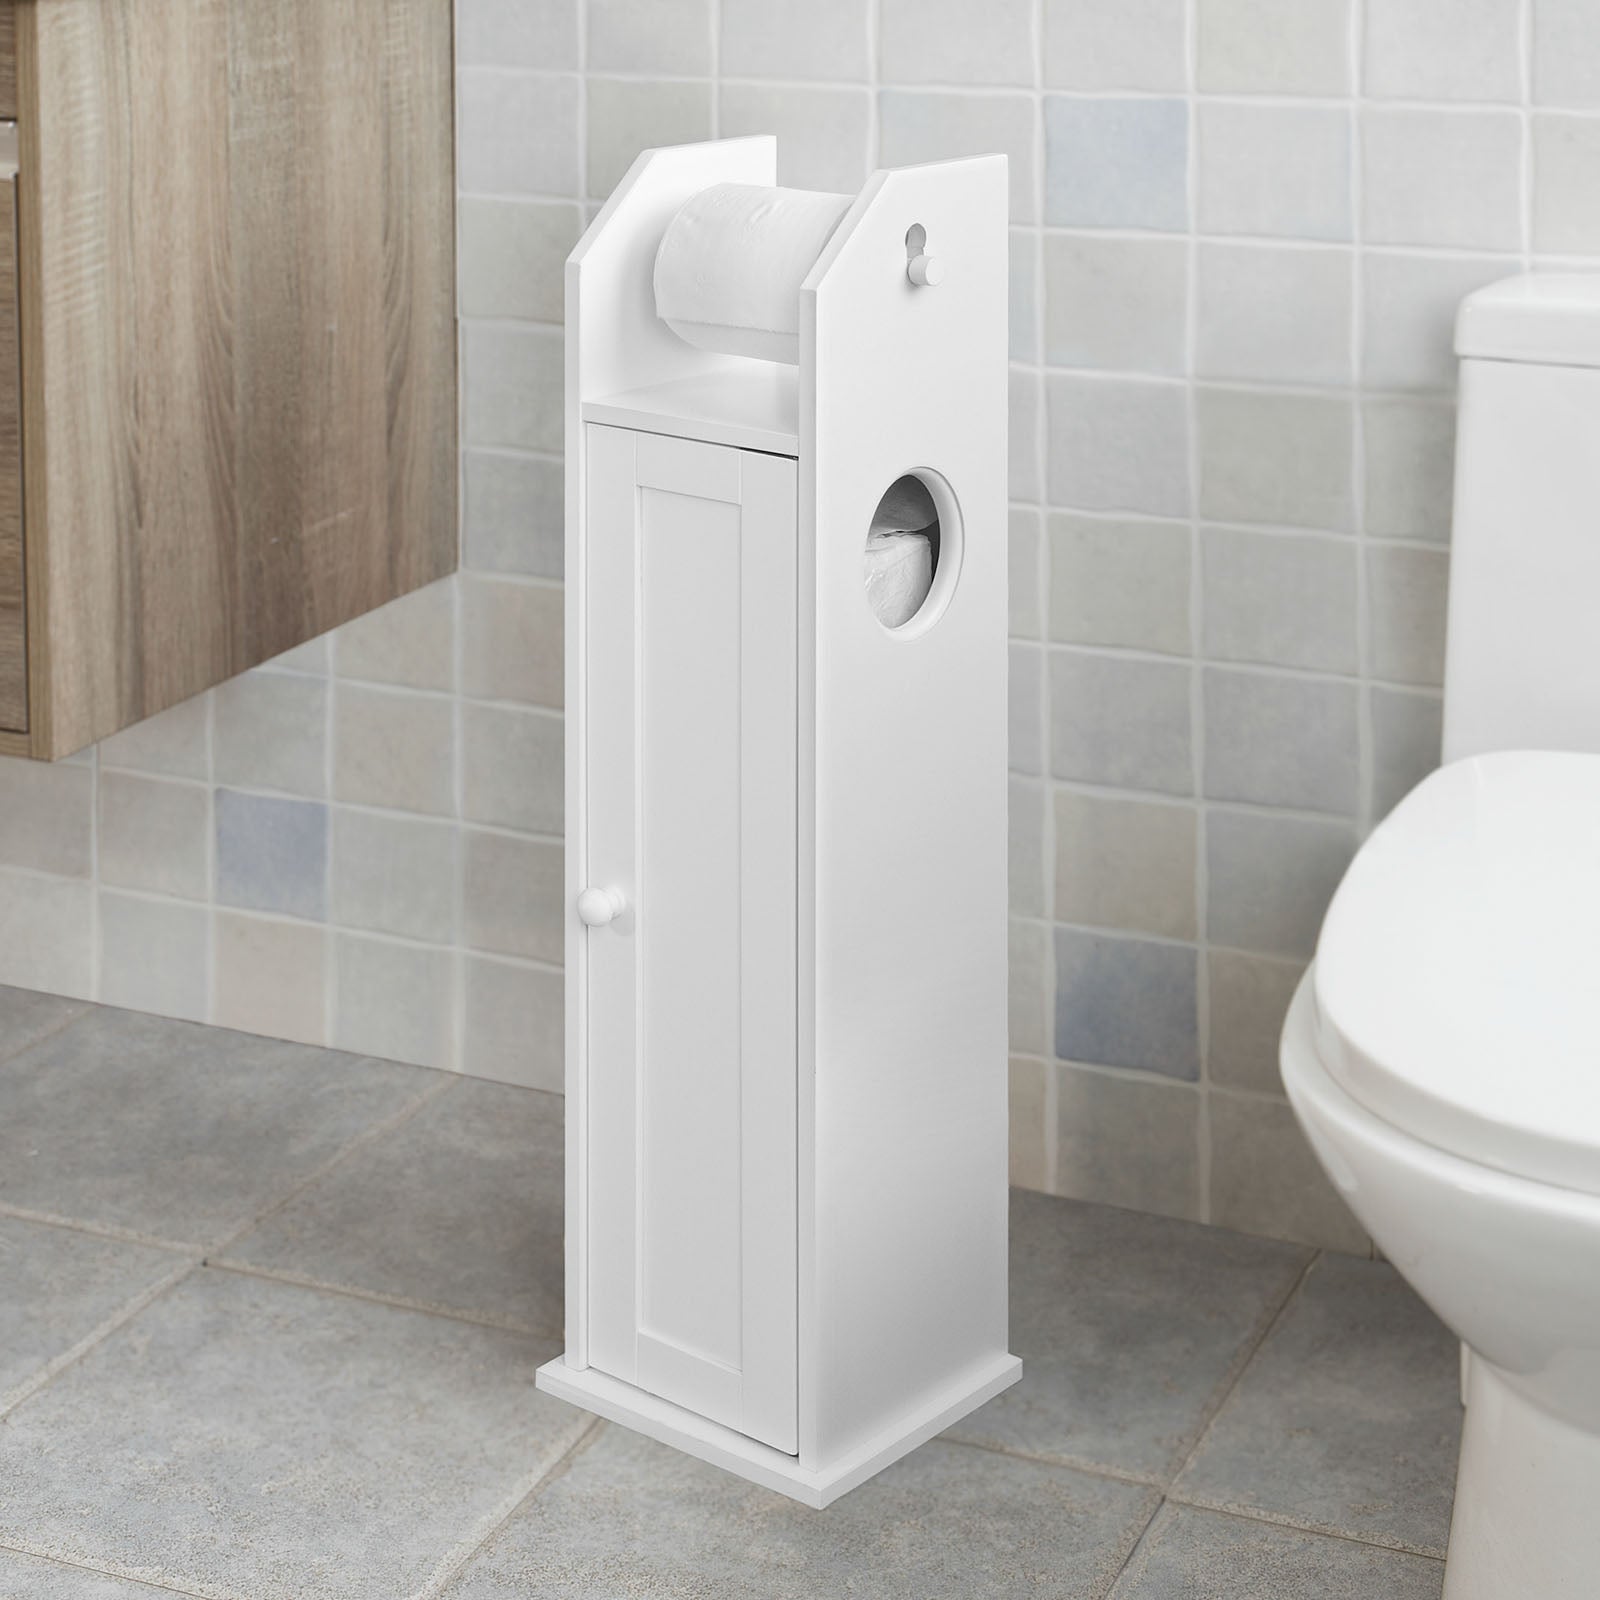 SoBuy Free Standing Wood Bathroom Cabinet,Toilet Paper Roll Holder, FRG135-W